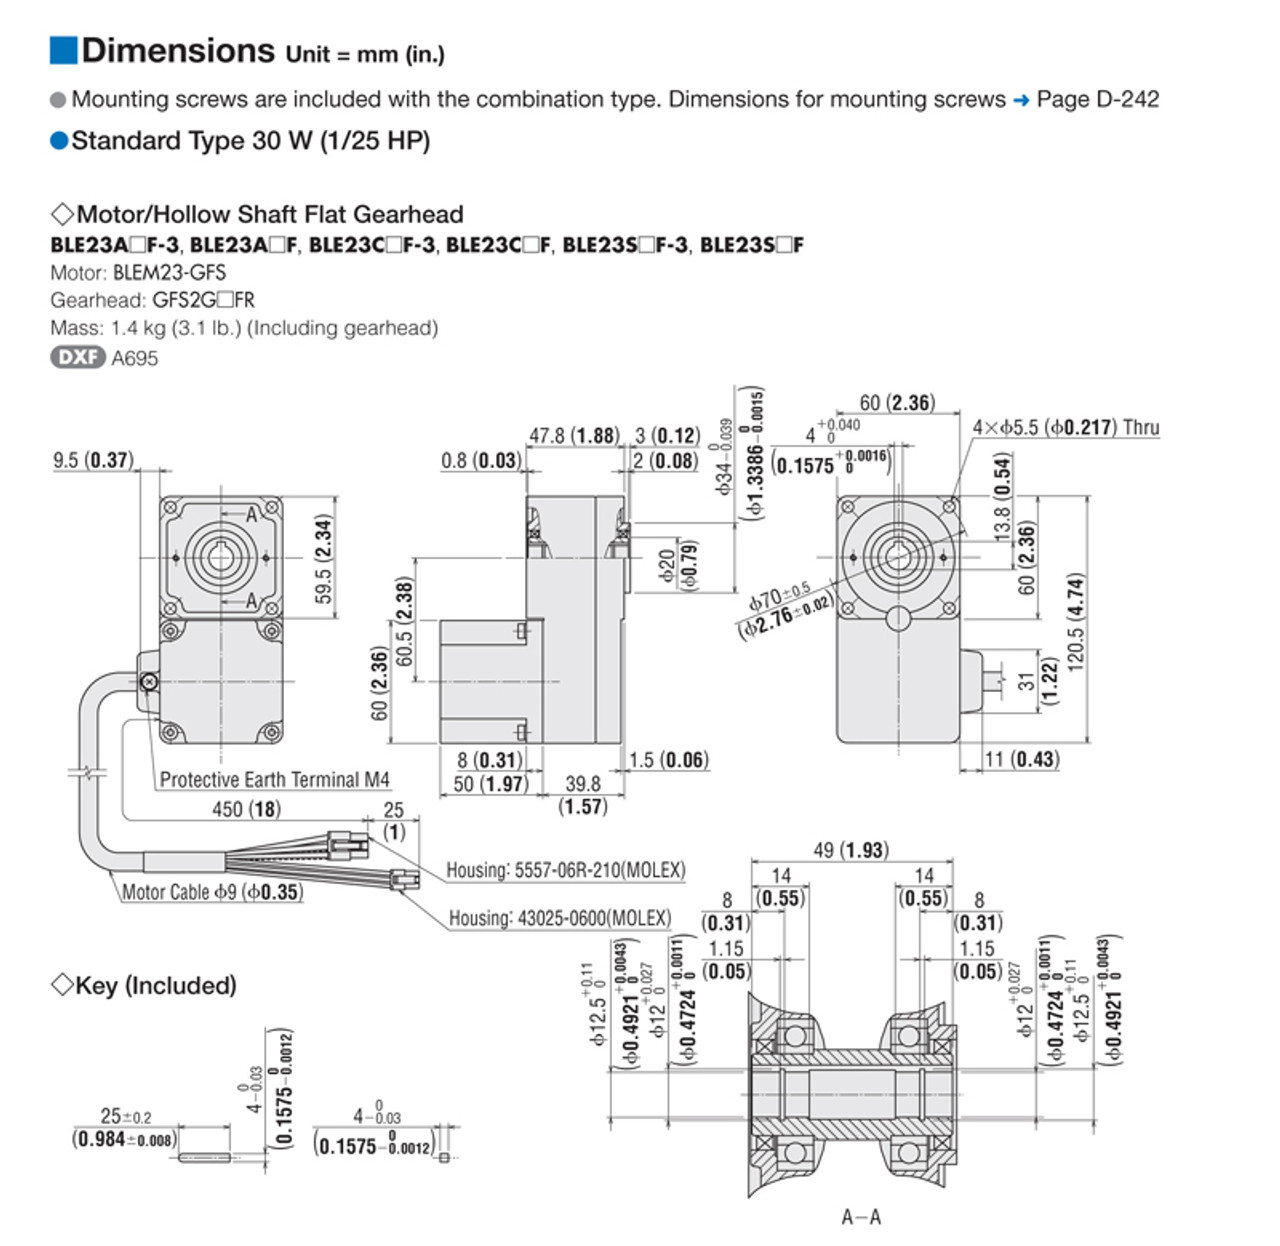 BLEM23-GFS / GFS2G200FR - Dimensions